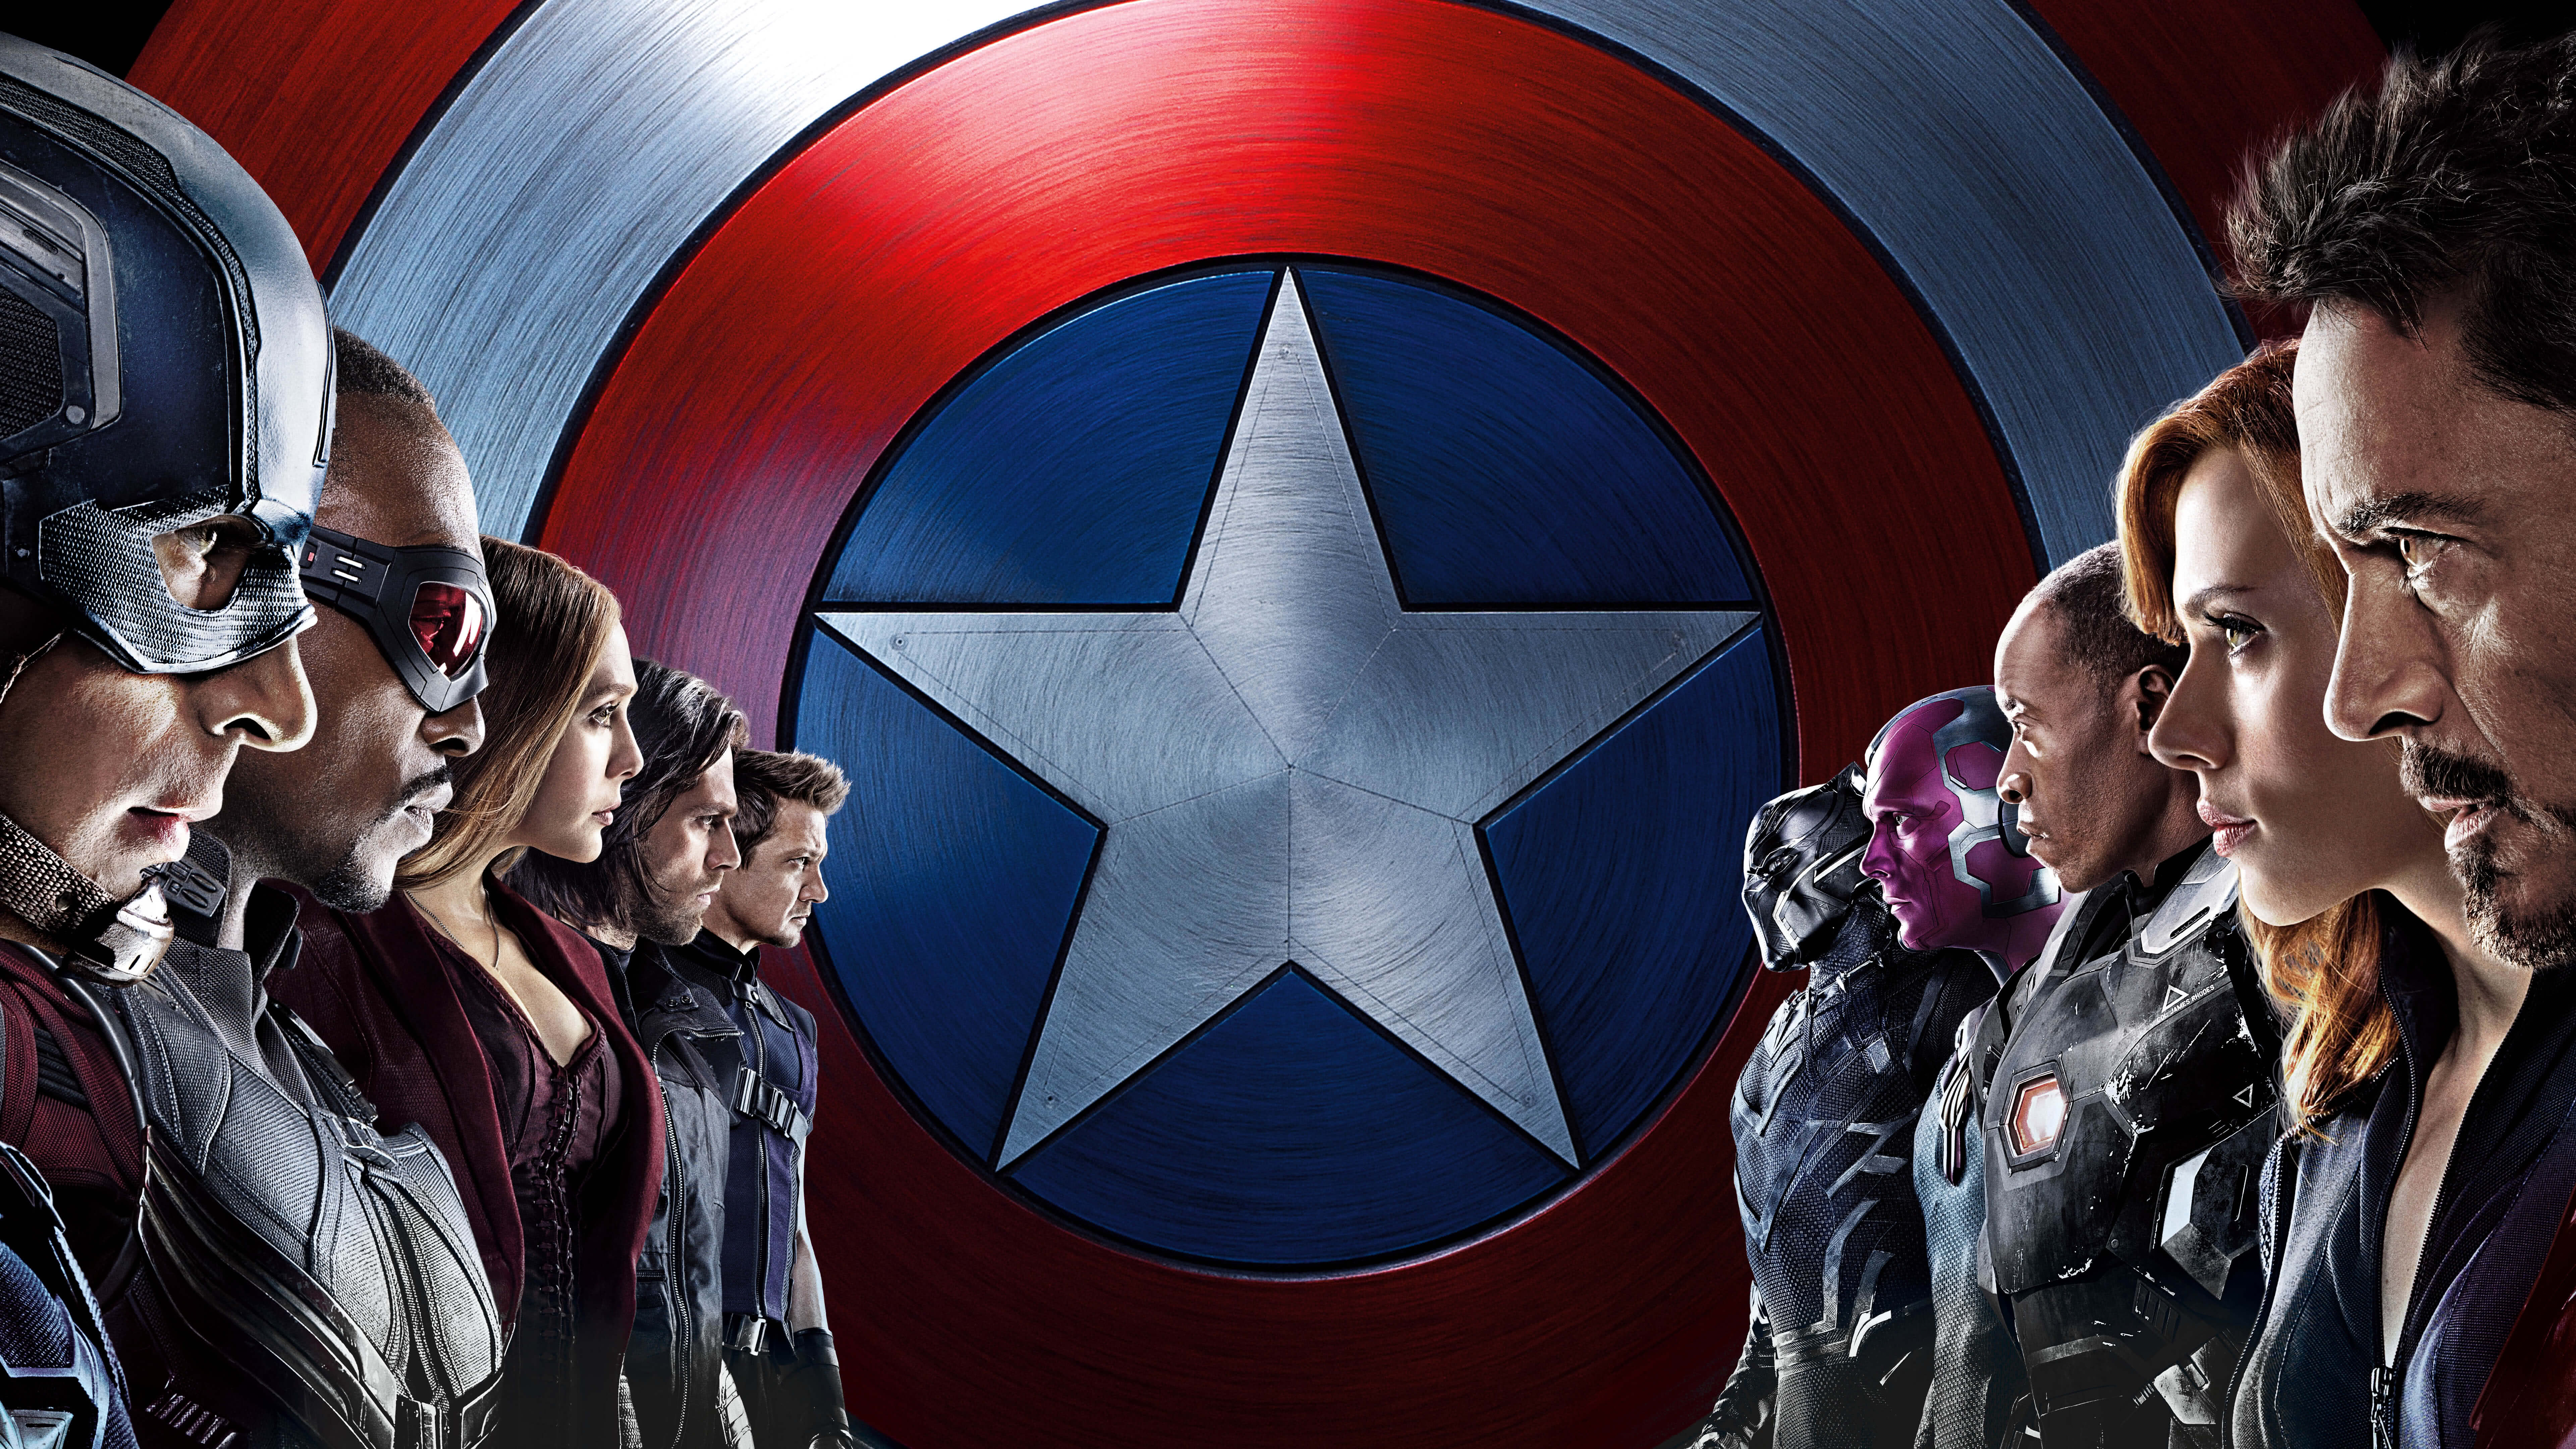 7680x4320 Hình nền Captain America: Civil War UHD 8K